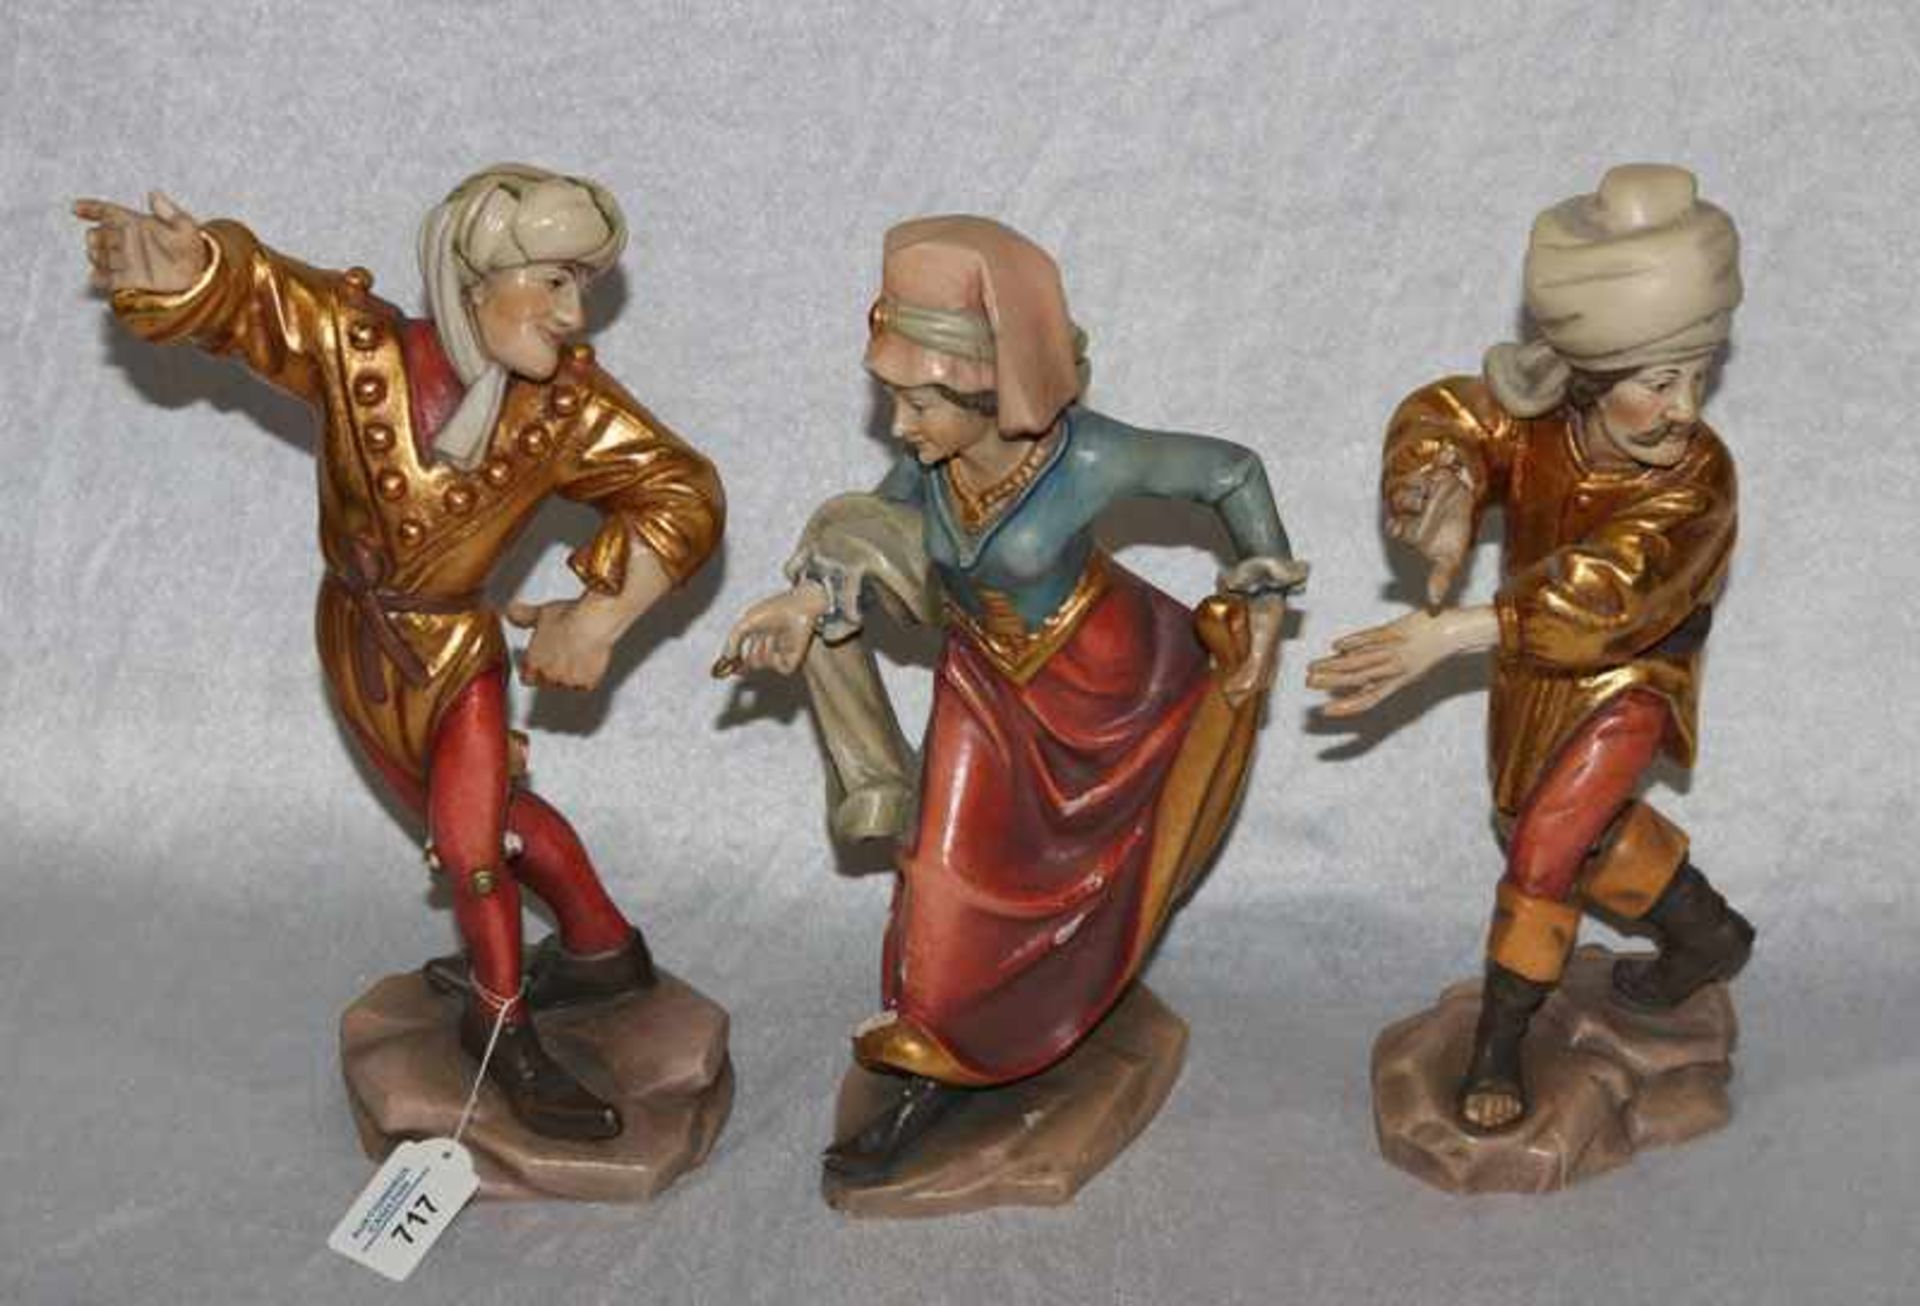 3 Holz Figurenskulpturen 'Moriskentänzer', farbig gefaßt, Fassung teils beschädigt, H 32 cm